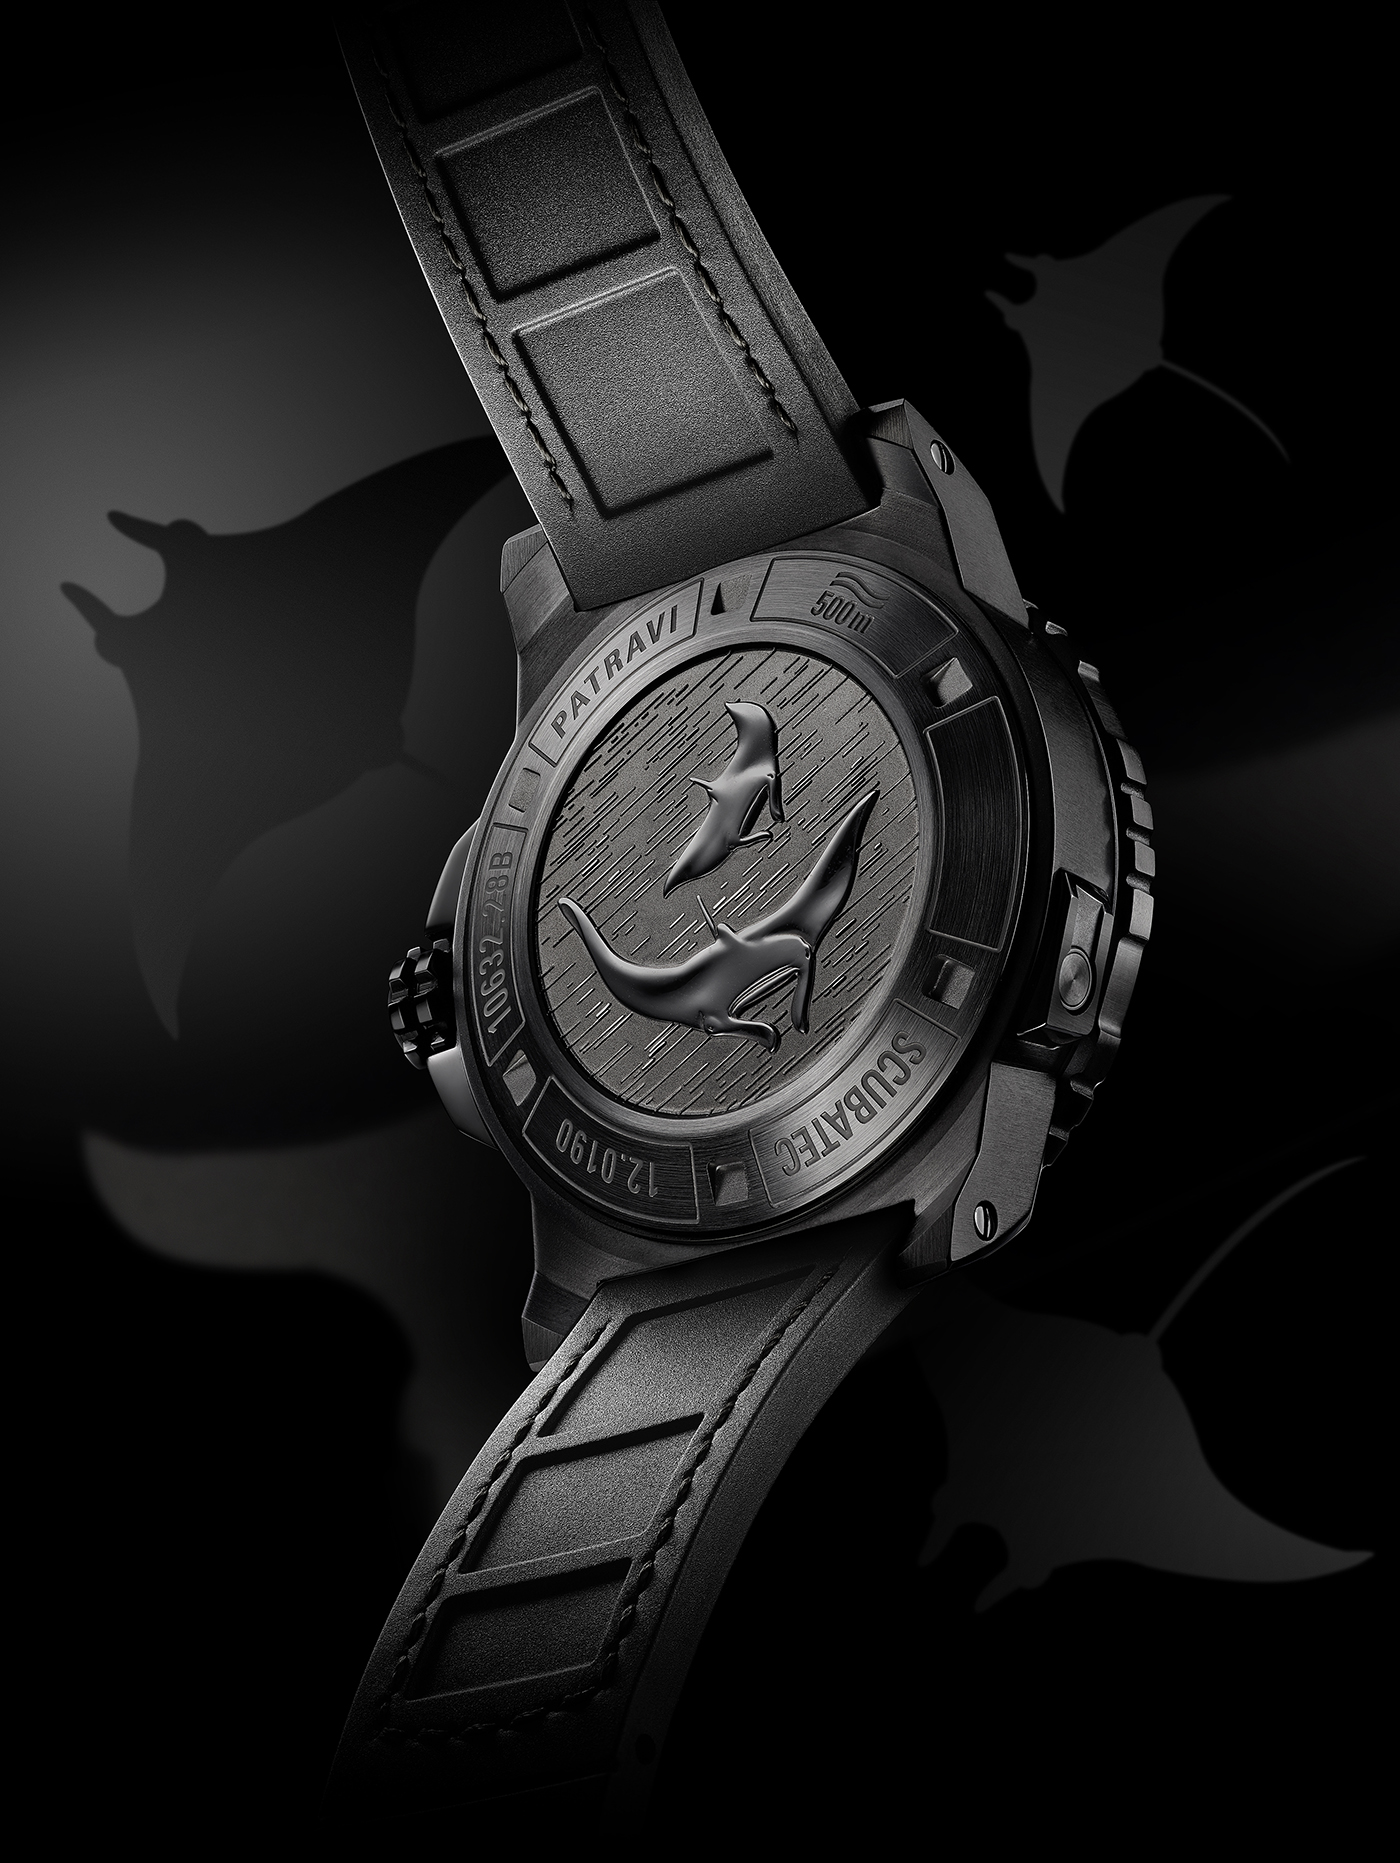 Carl F. Bucherer Introduces New Monochrome Patravi ScubaTec Black Watch Releases 